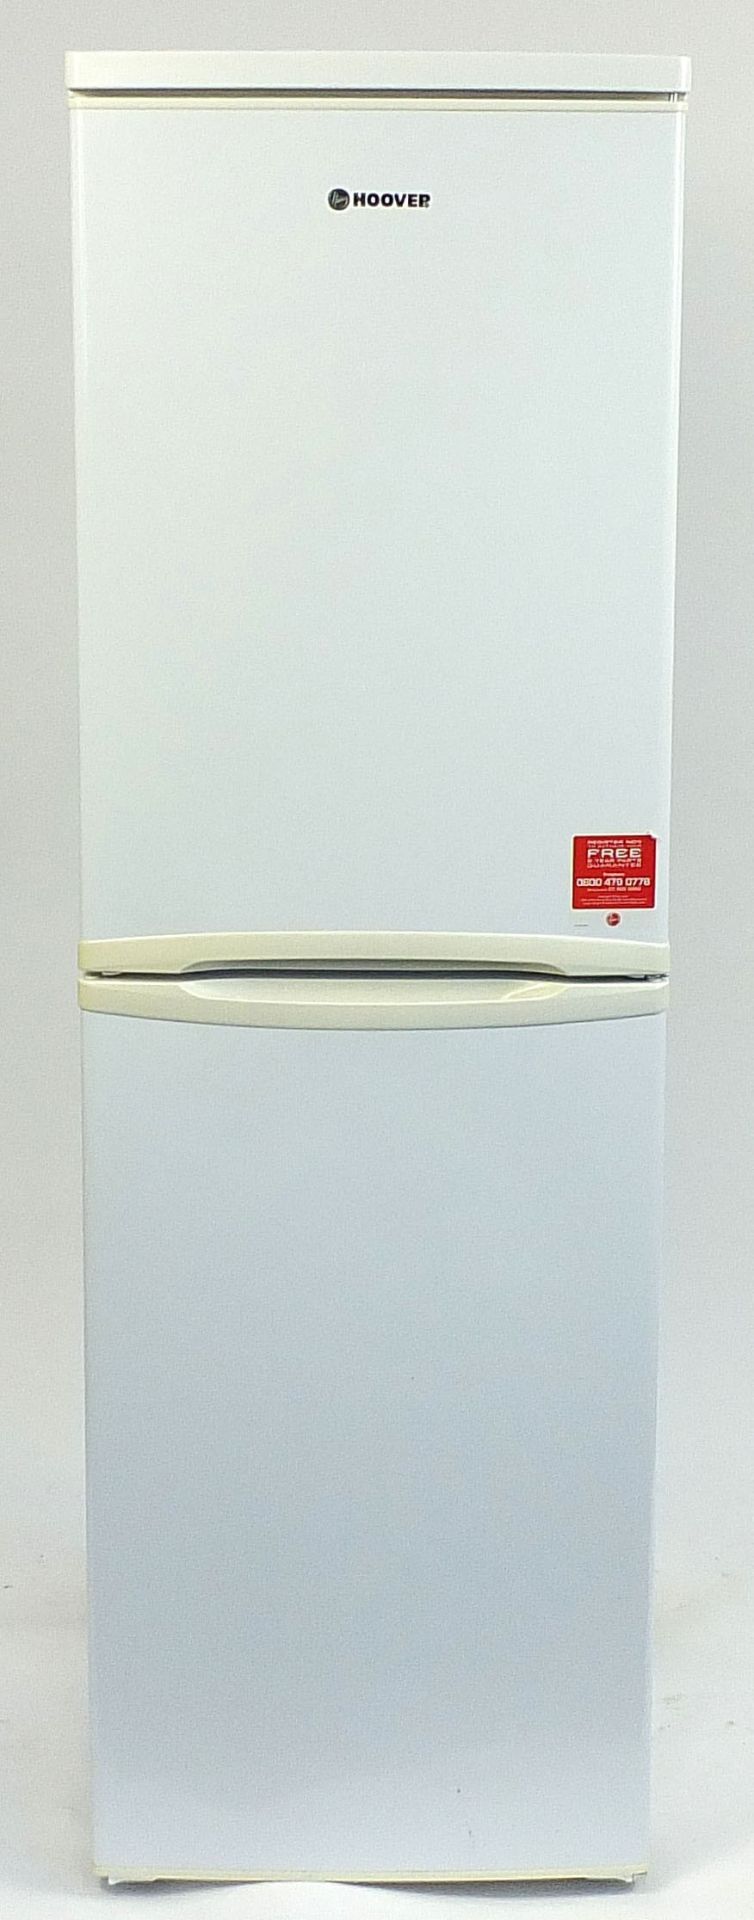 Hoover fridge freezer, 173cm H x 55cm W x 55cm D